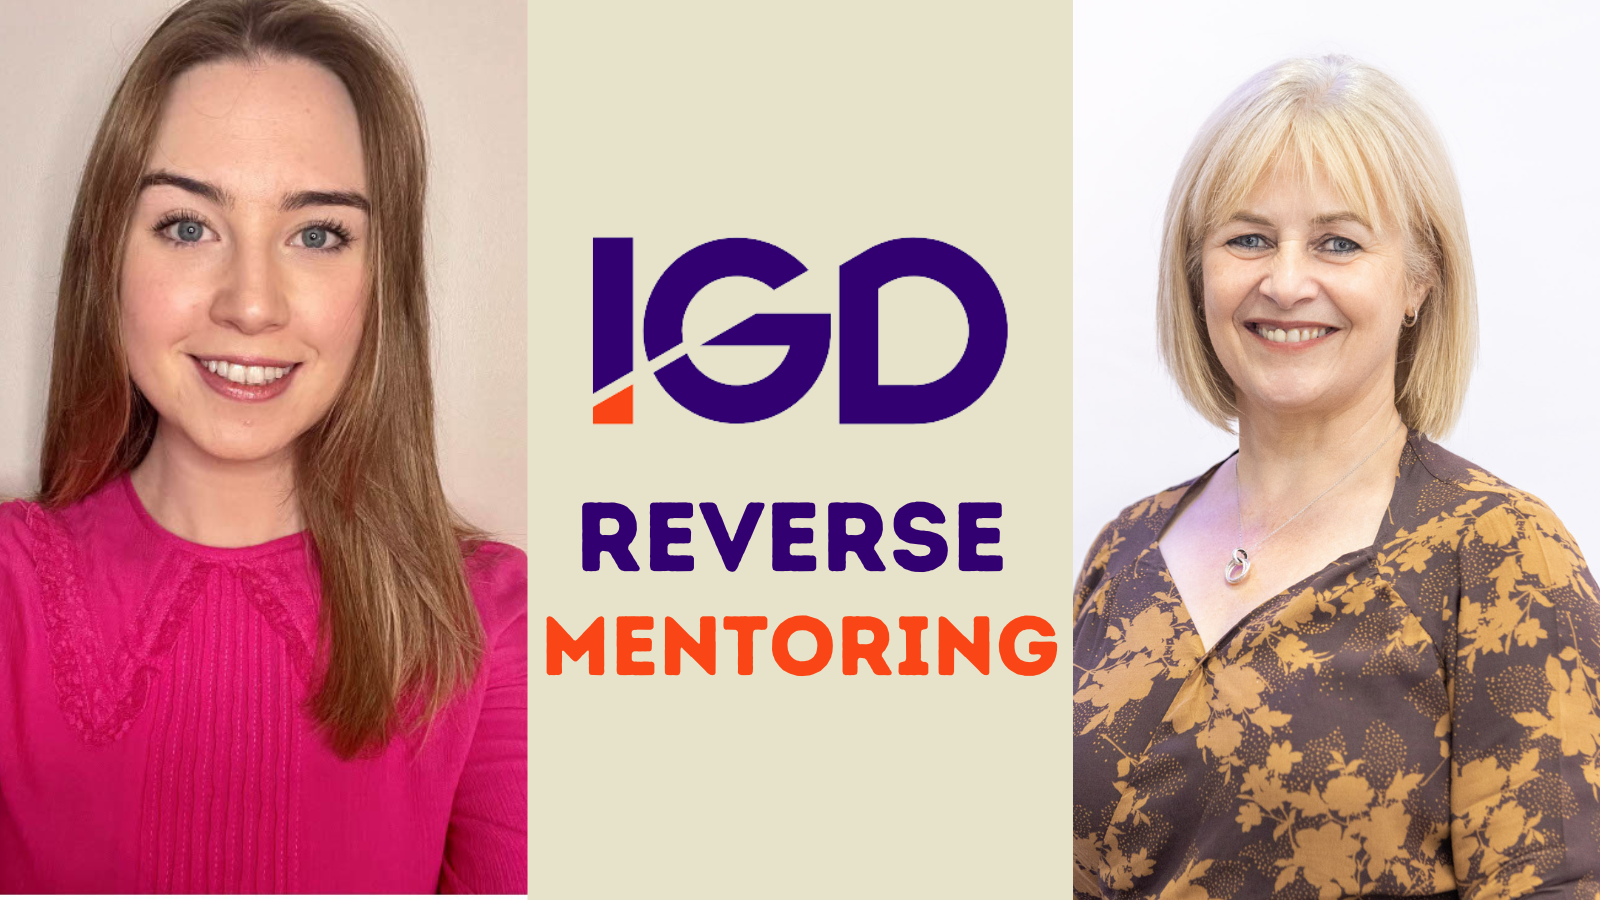 MDS joins IGD Reverse Mentoring programme